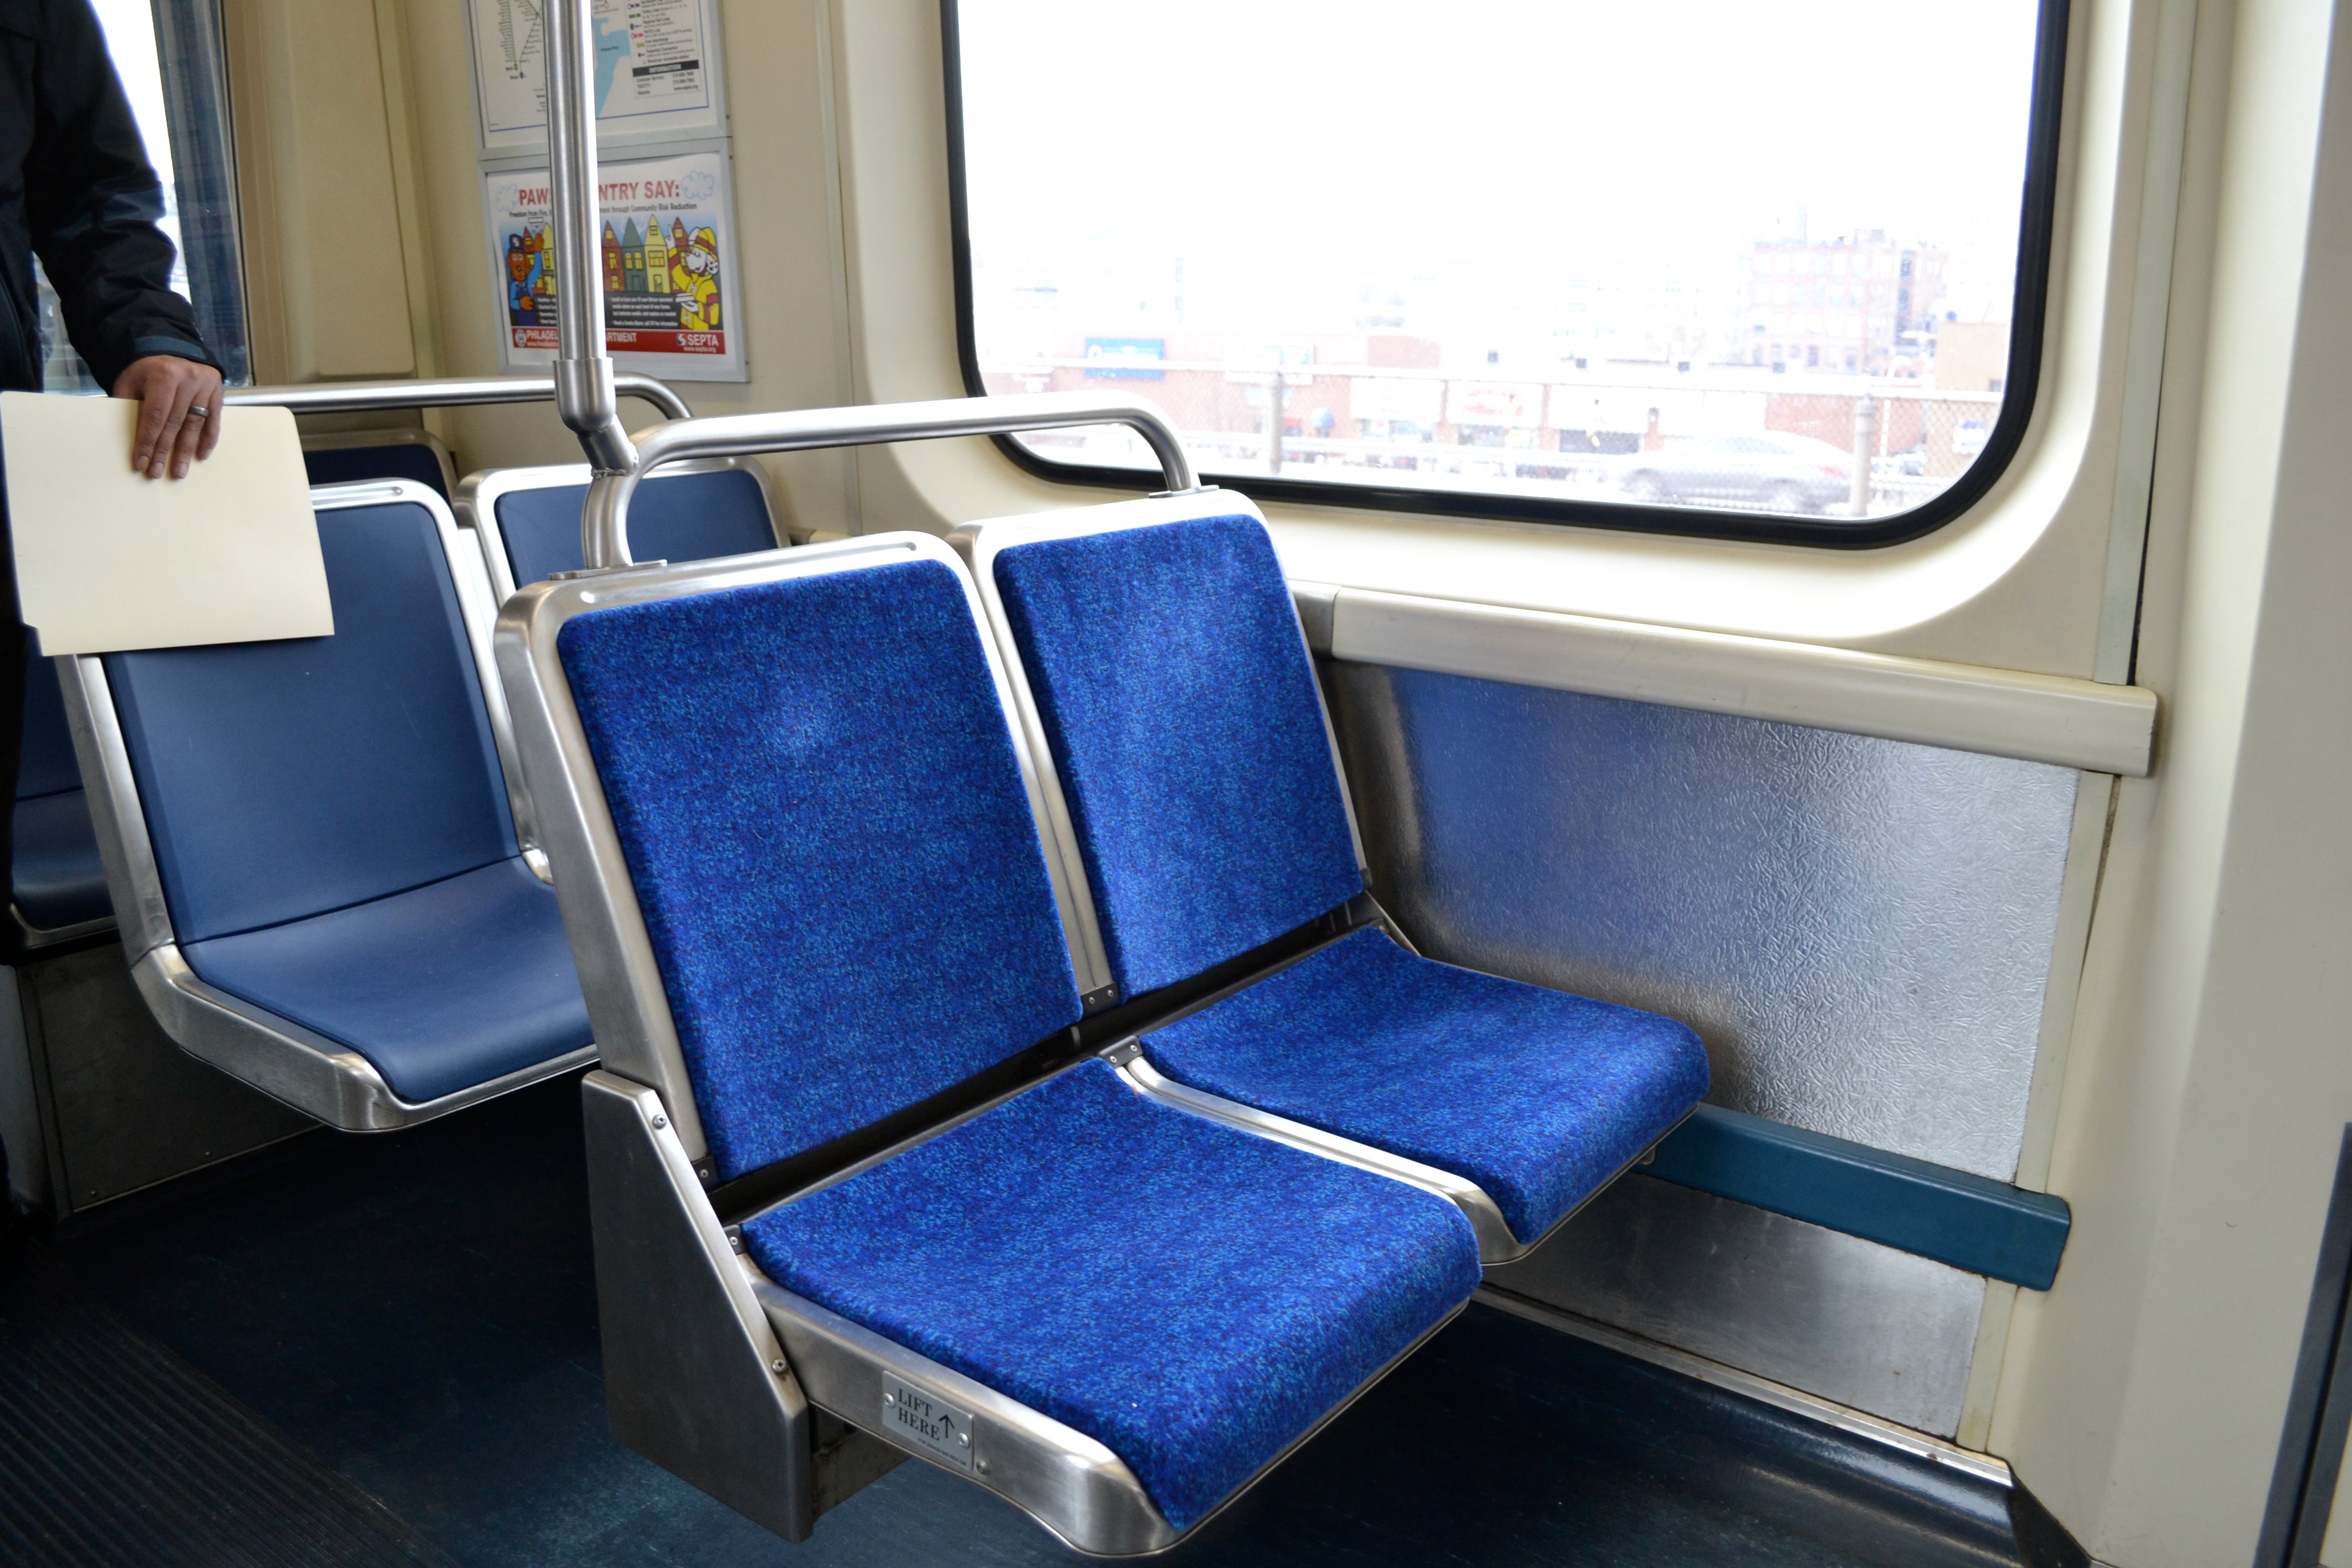 The current cloth seats next to the prototype fiberglass seats